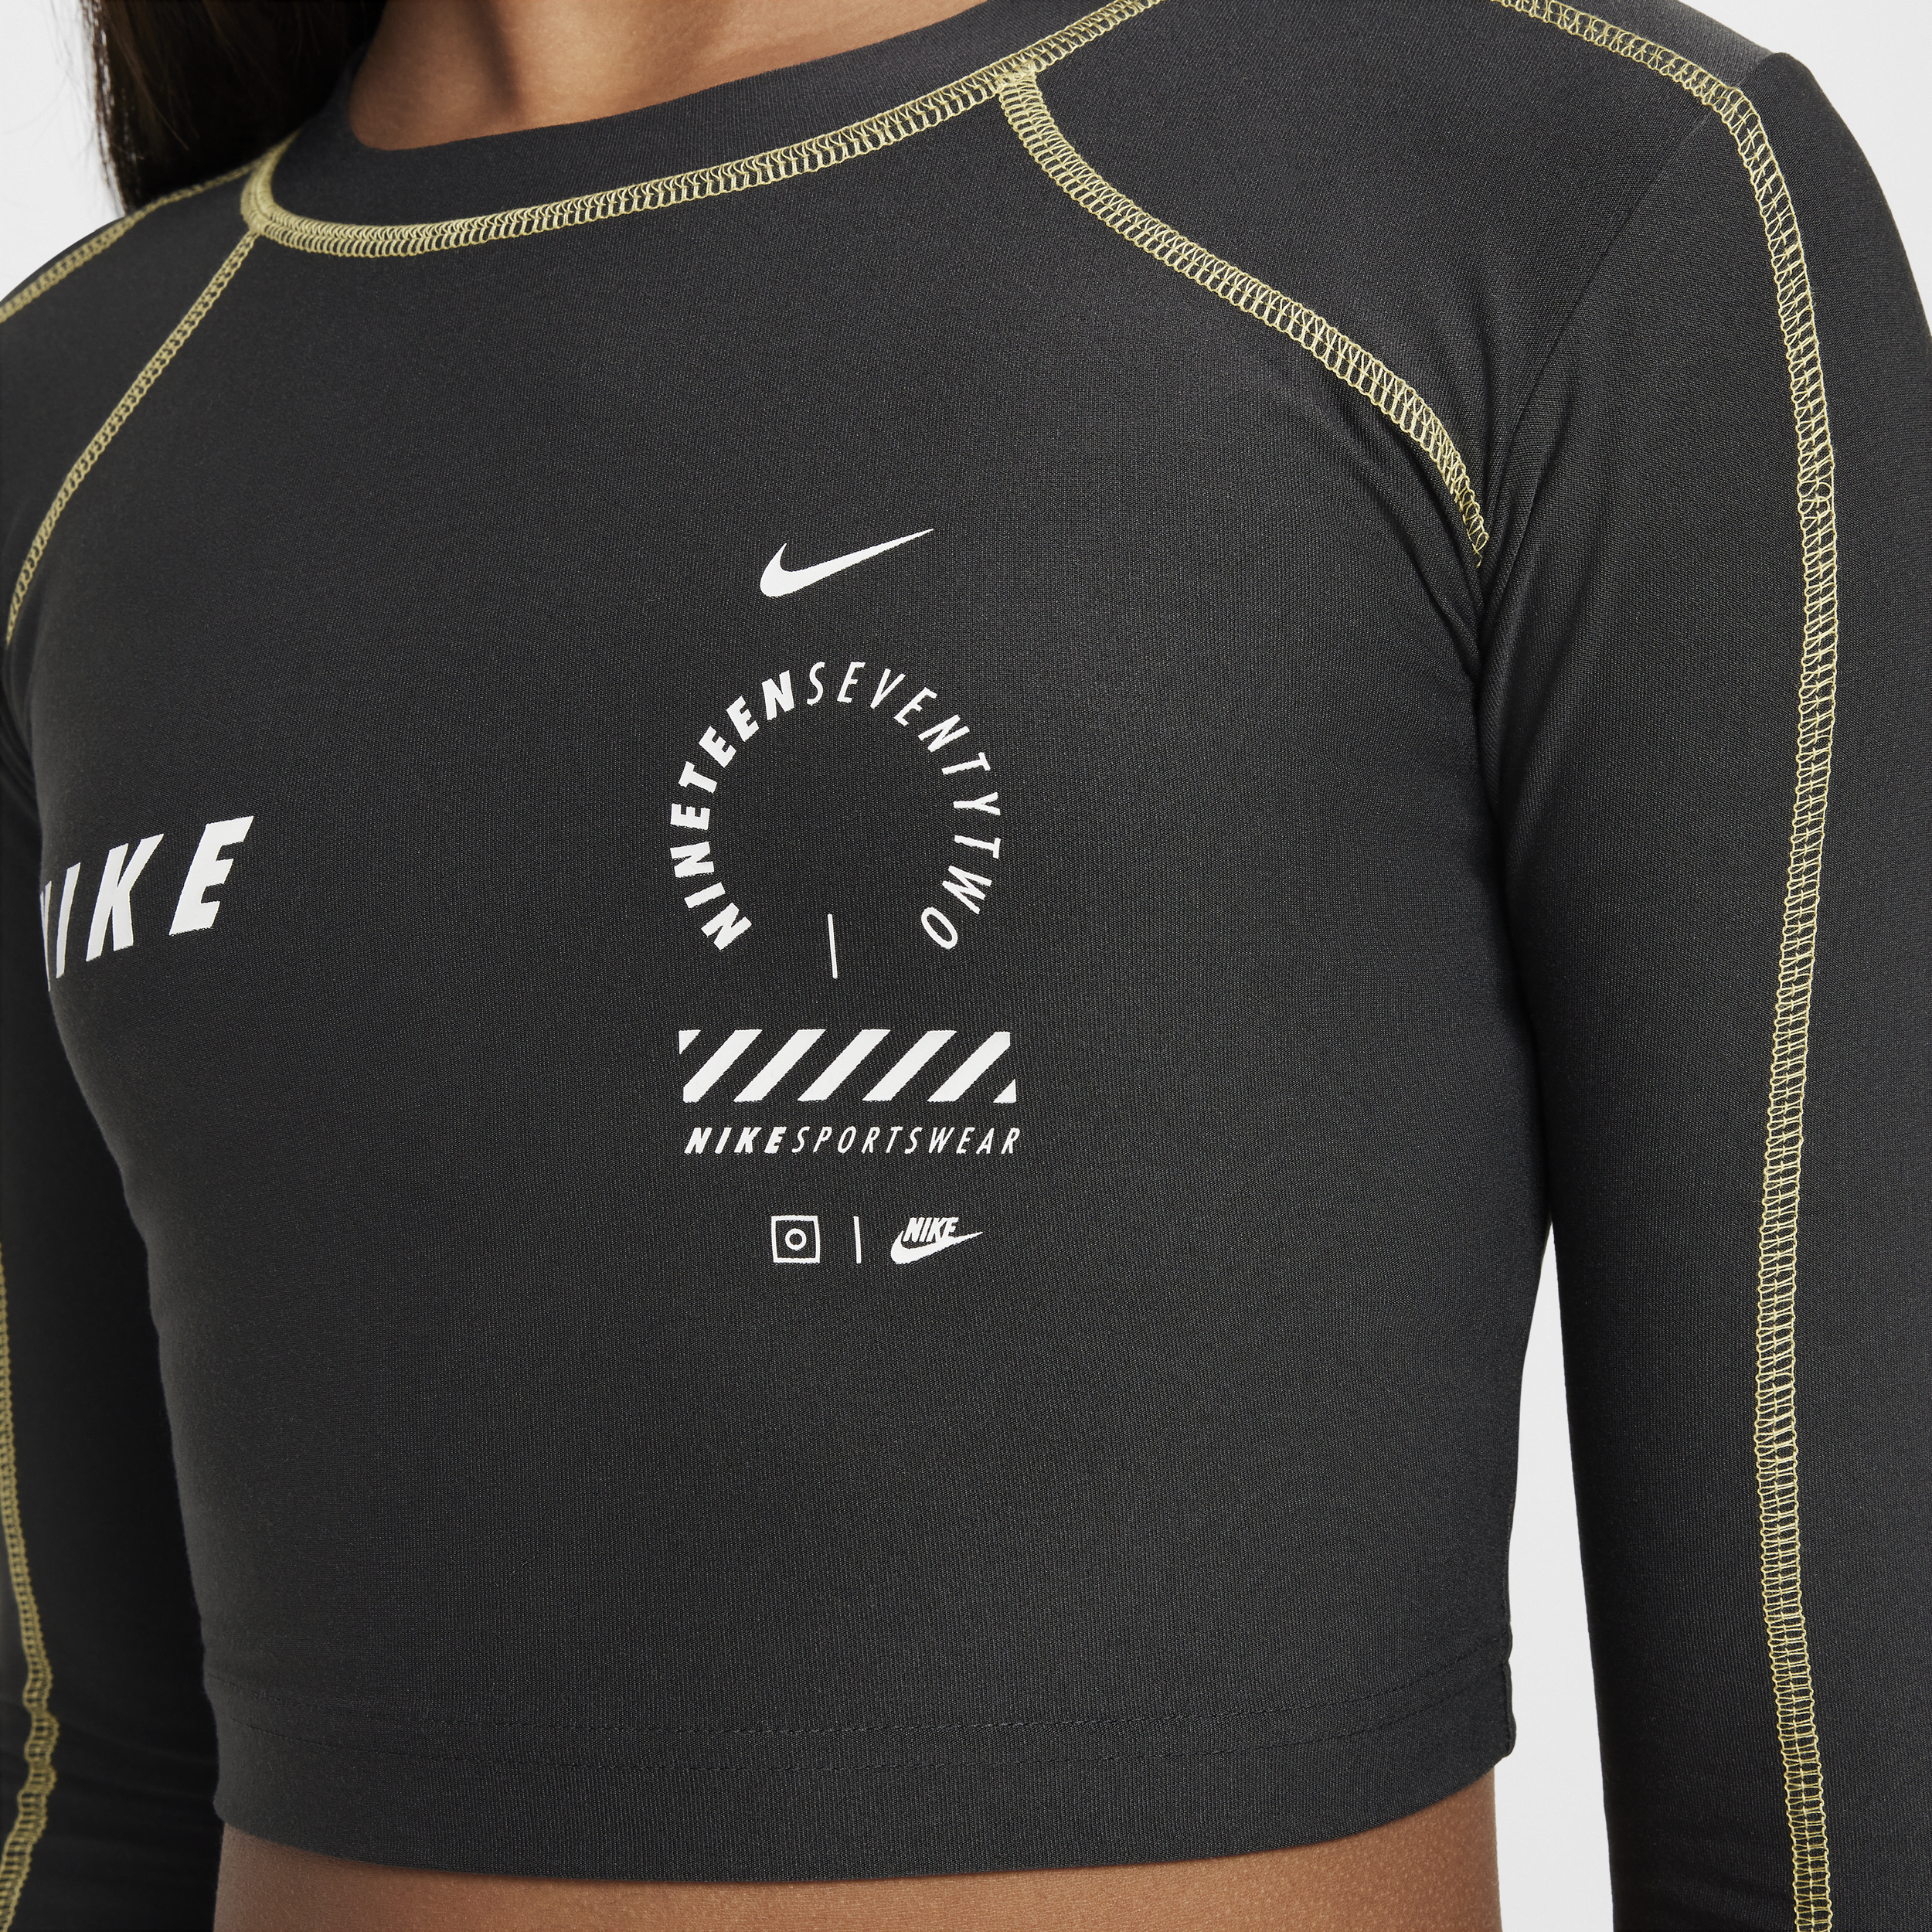 Nike Sportswear croptop met lange mouwen voor meisjes Grijs